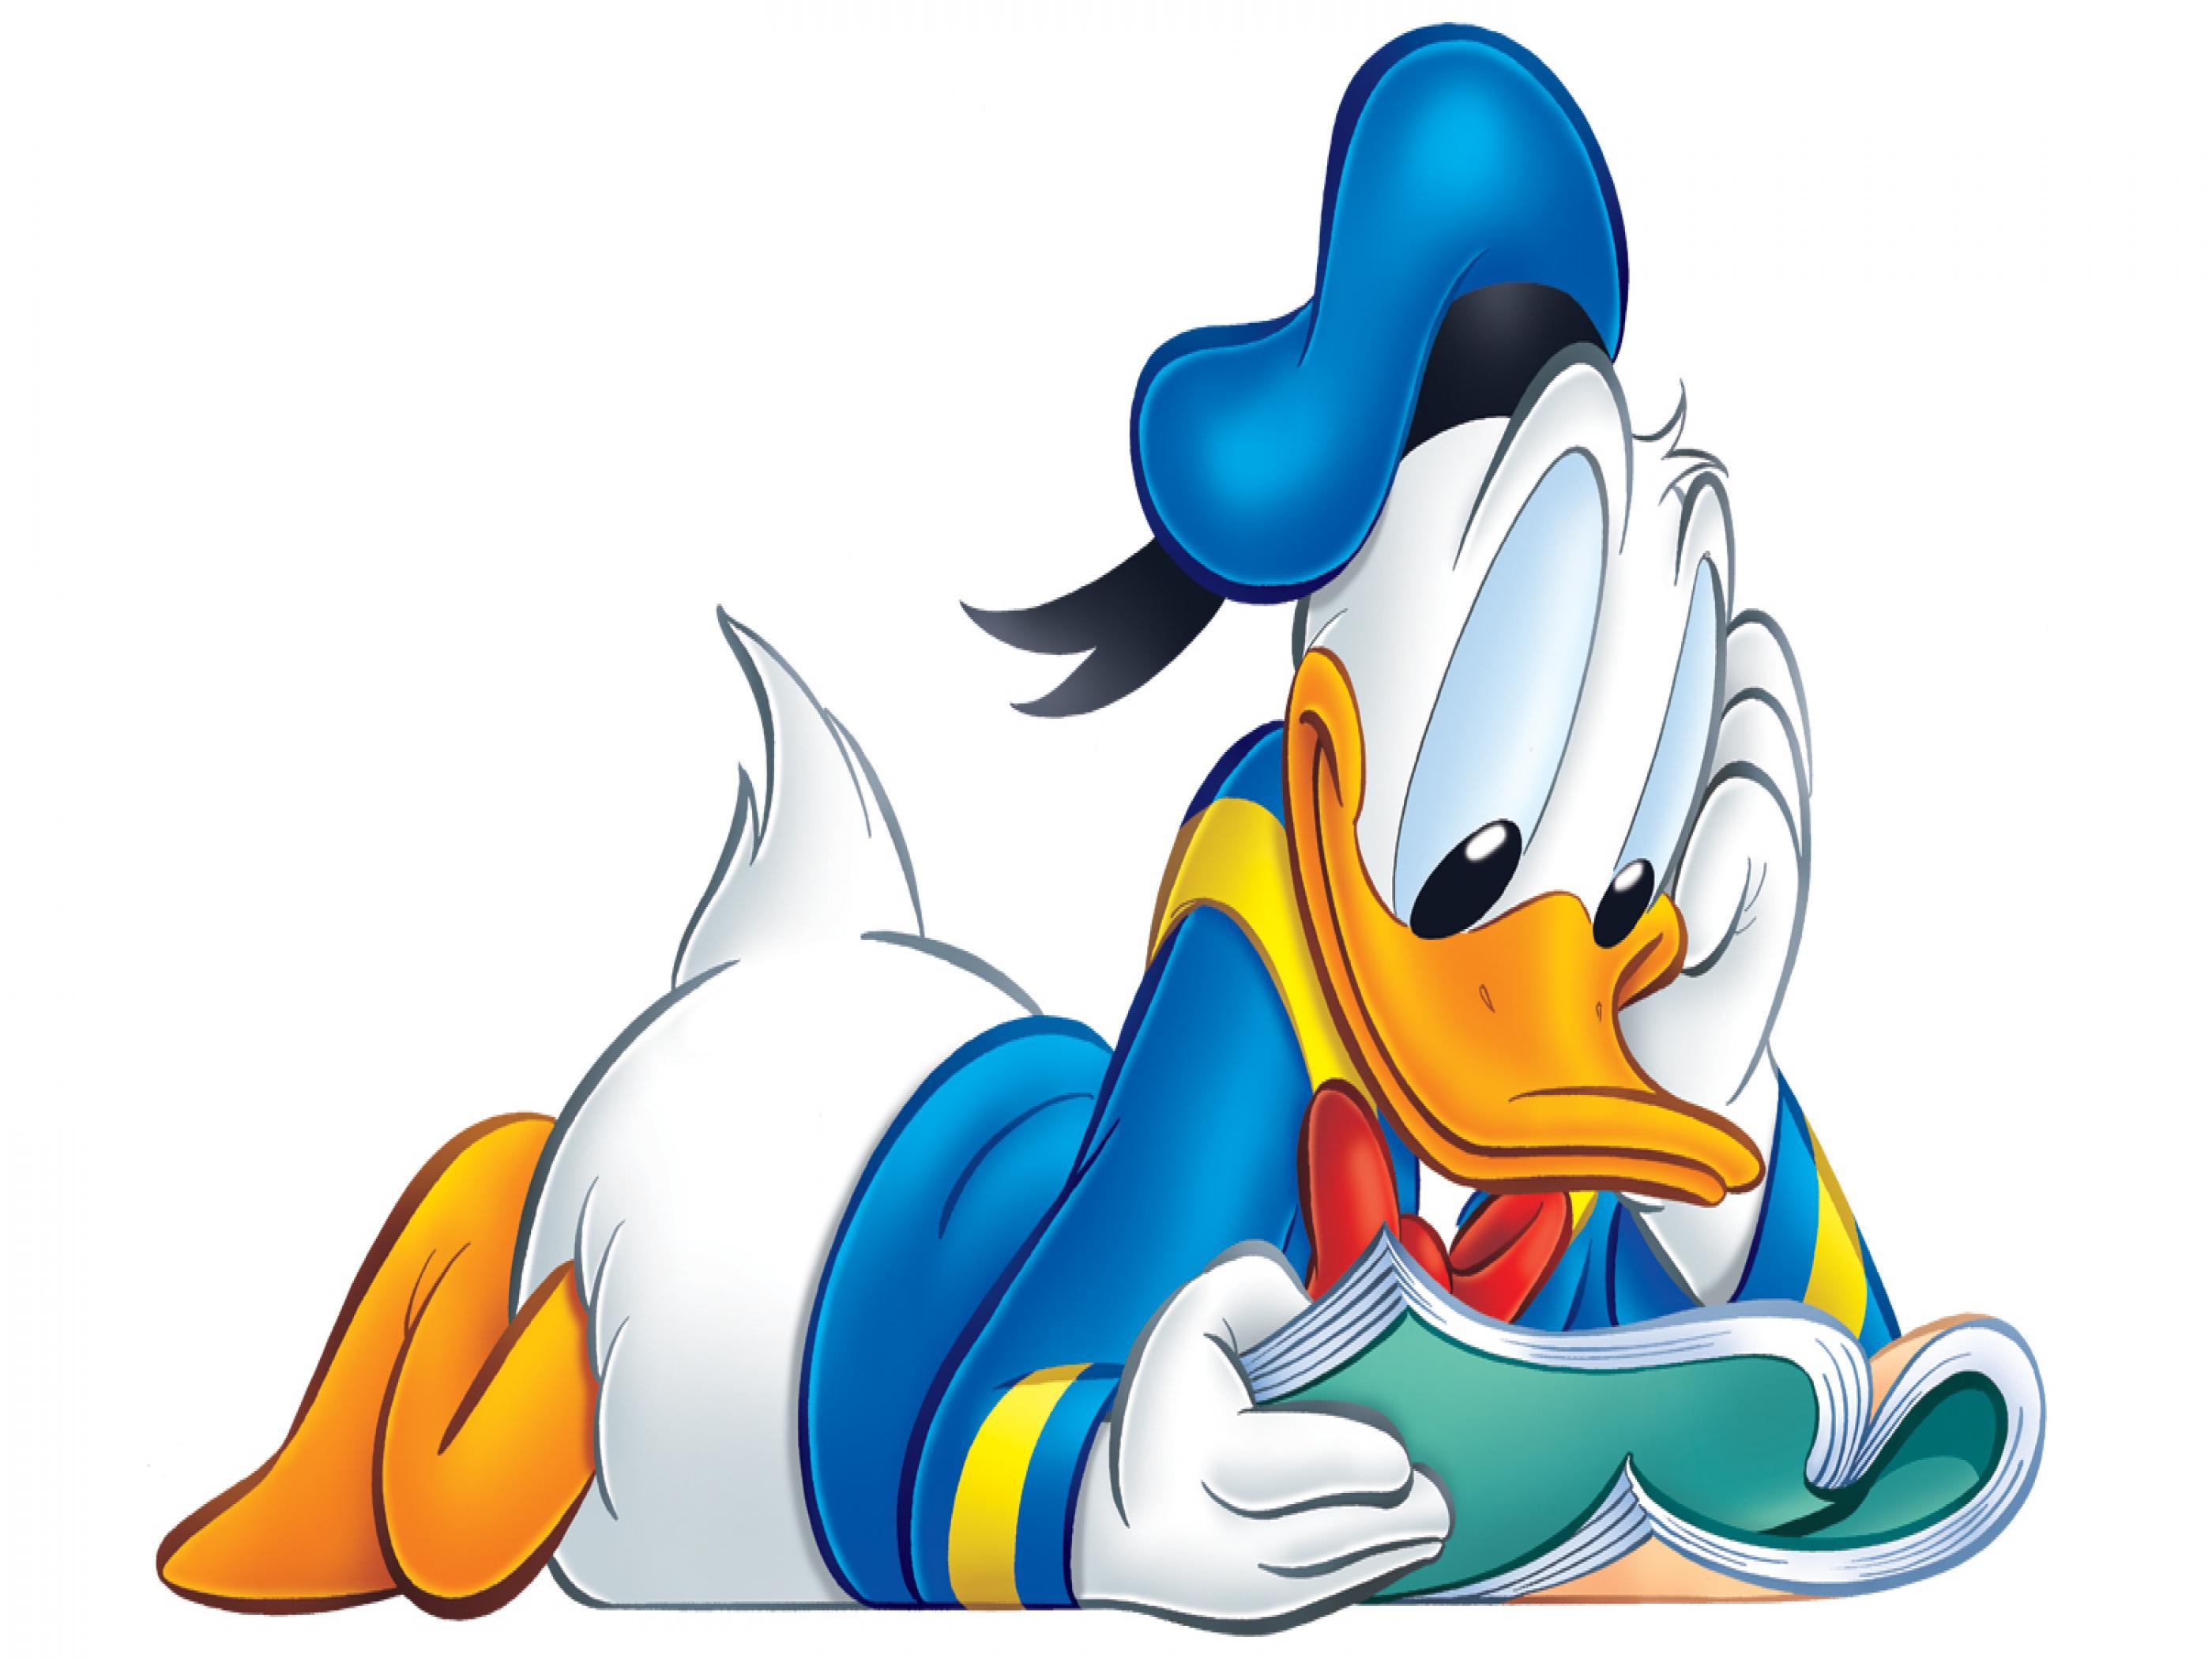 Donald Duck Wallpaper Widescreen #U8AS4B3